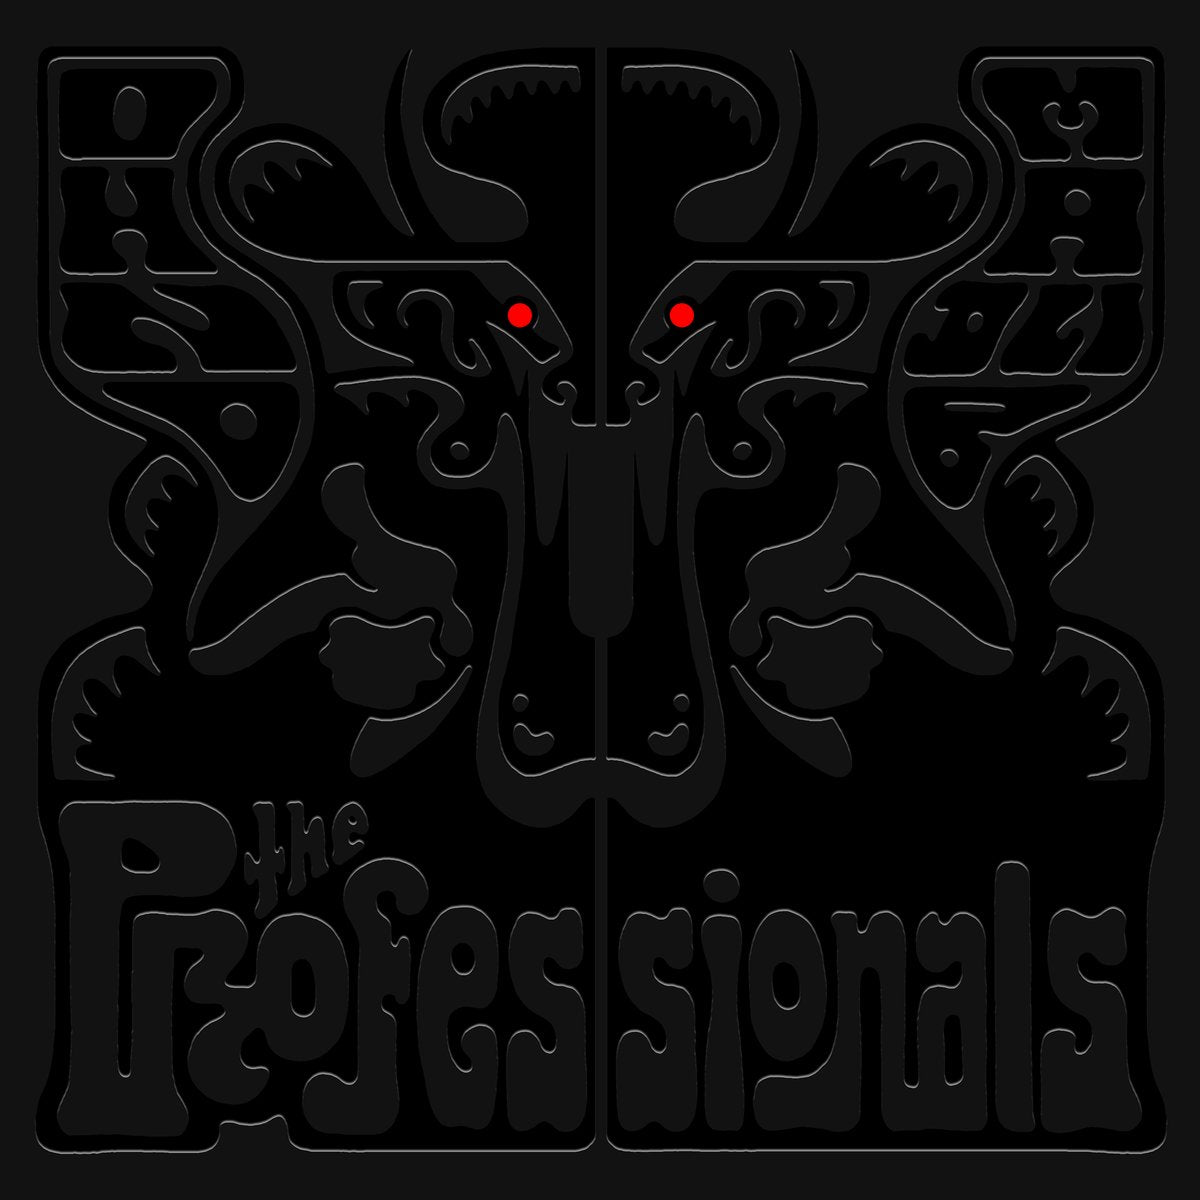 The Professionals (Madlib & Oh No) - The Professionals LP